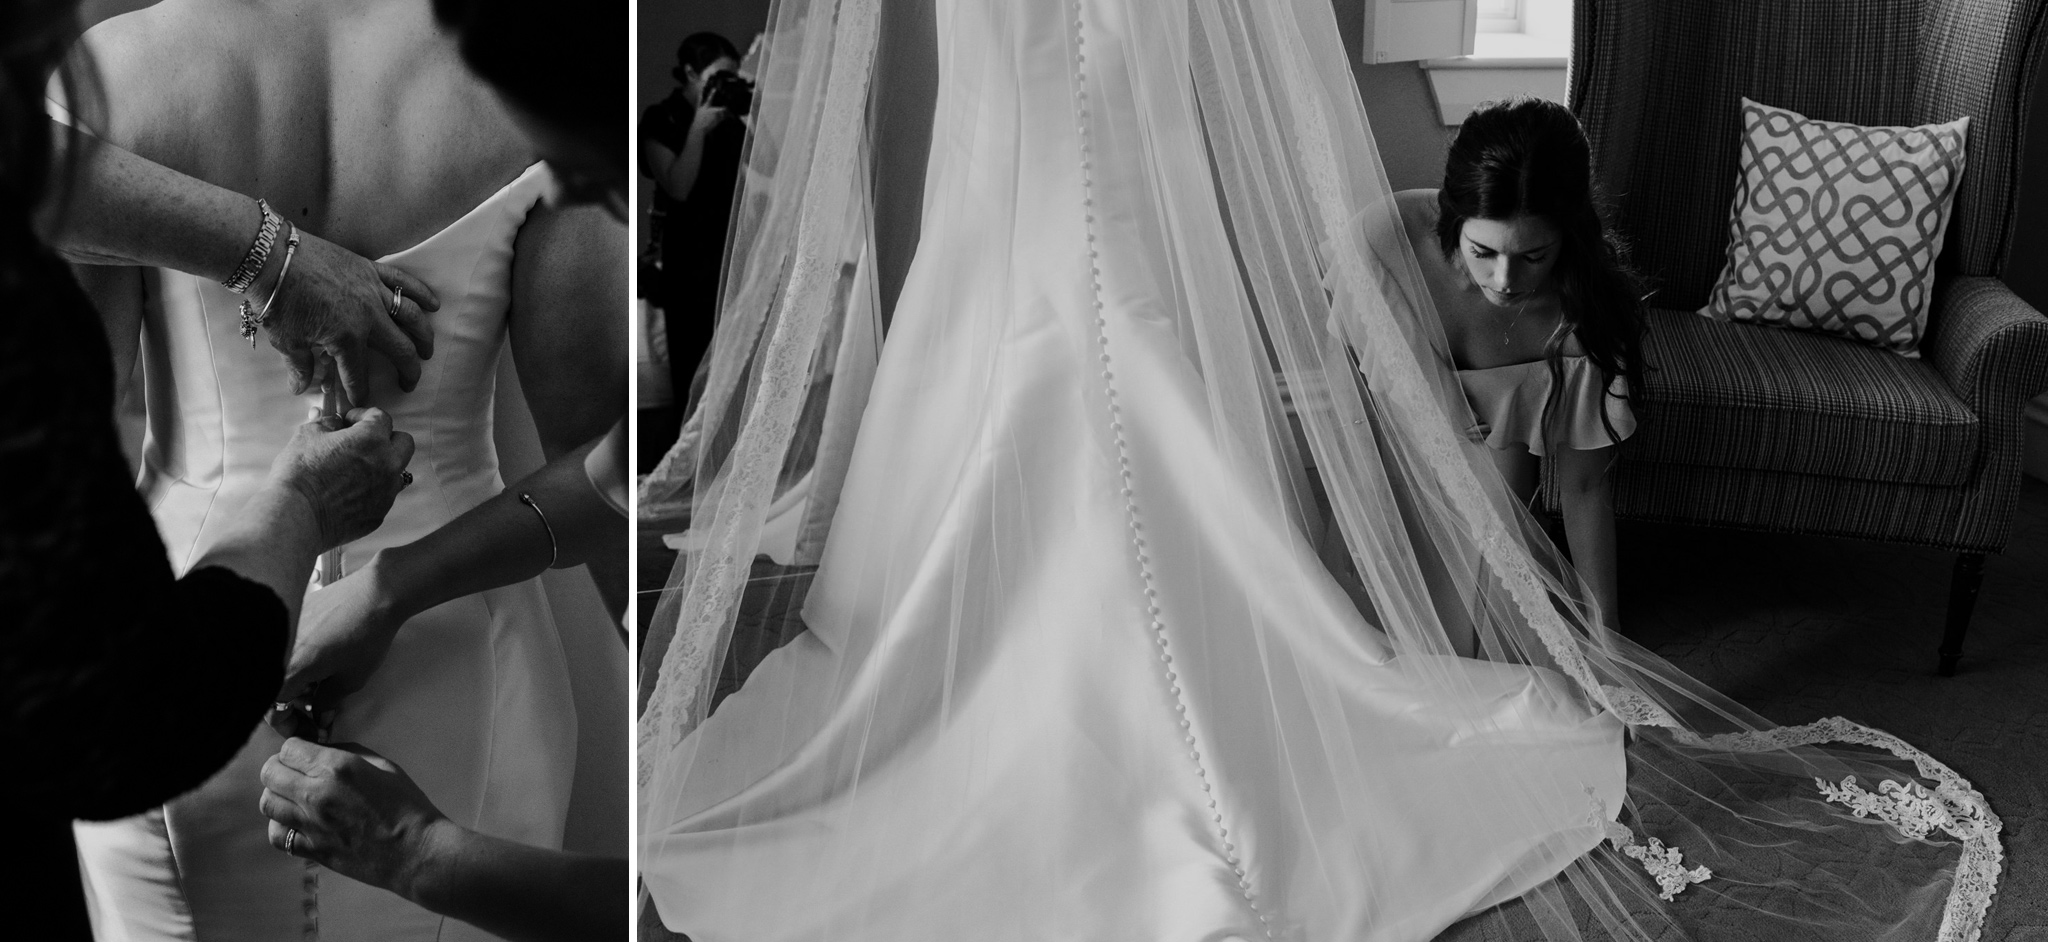 752-bride-getting-ready-black-white-portrait-bridal-wedding-algonquin-resort-st-andrews-by-the-sea.jpg